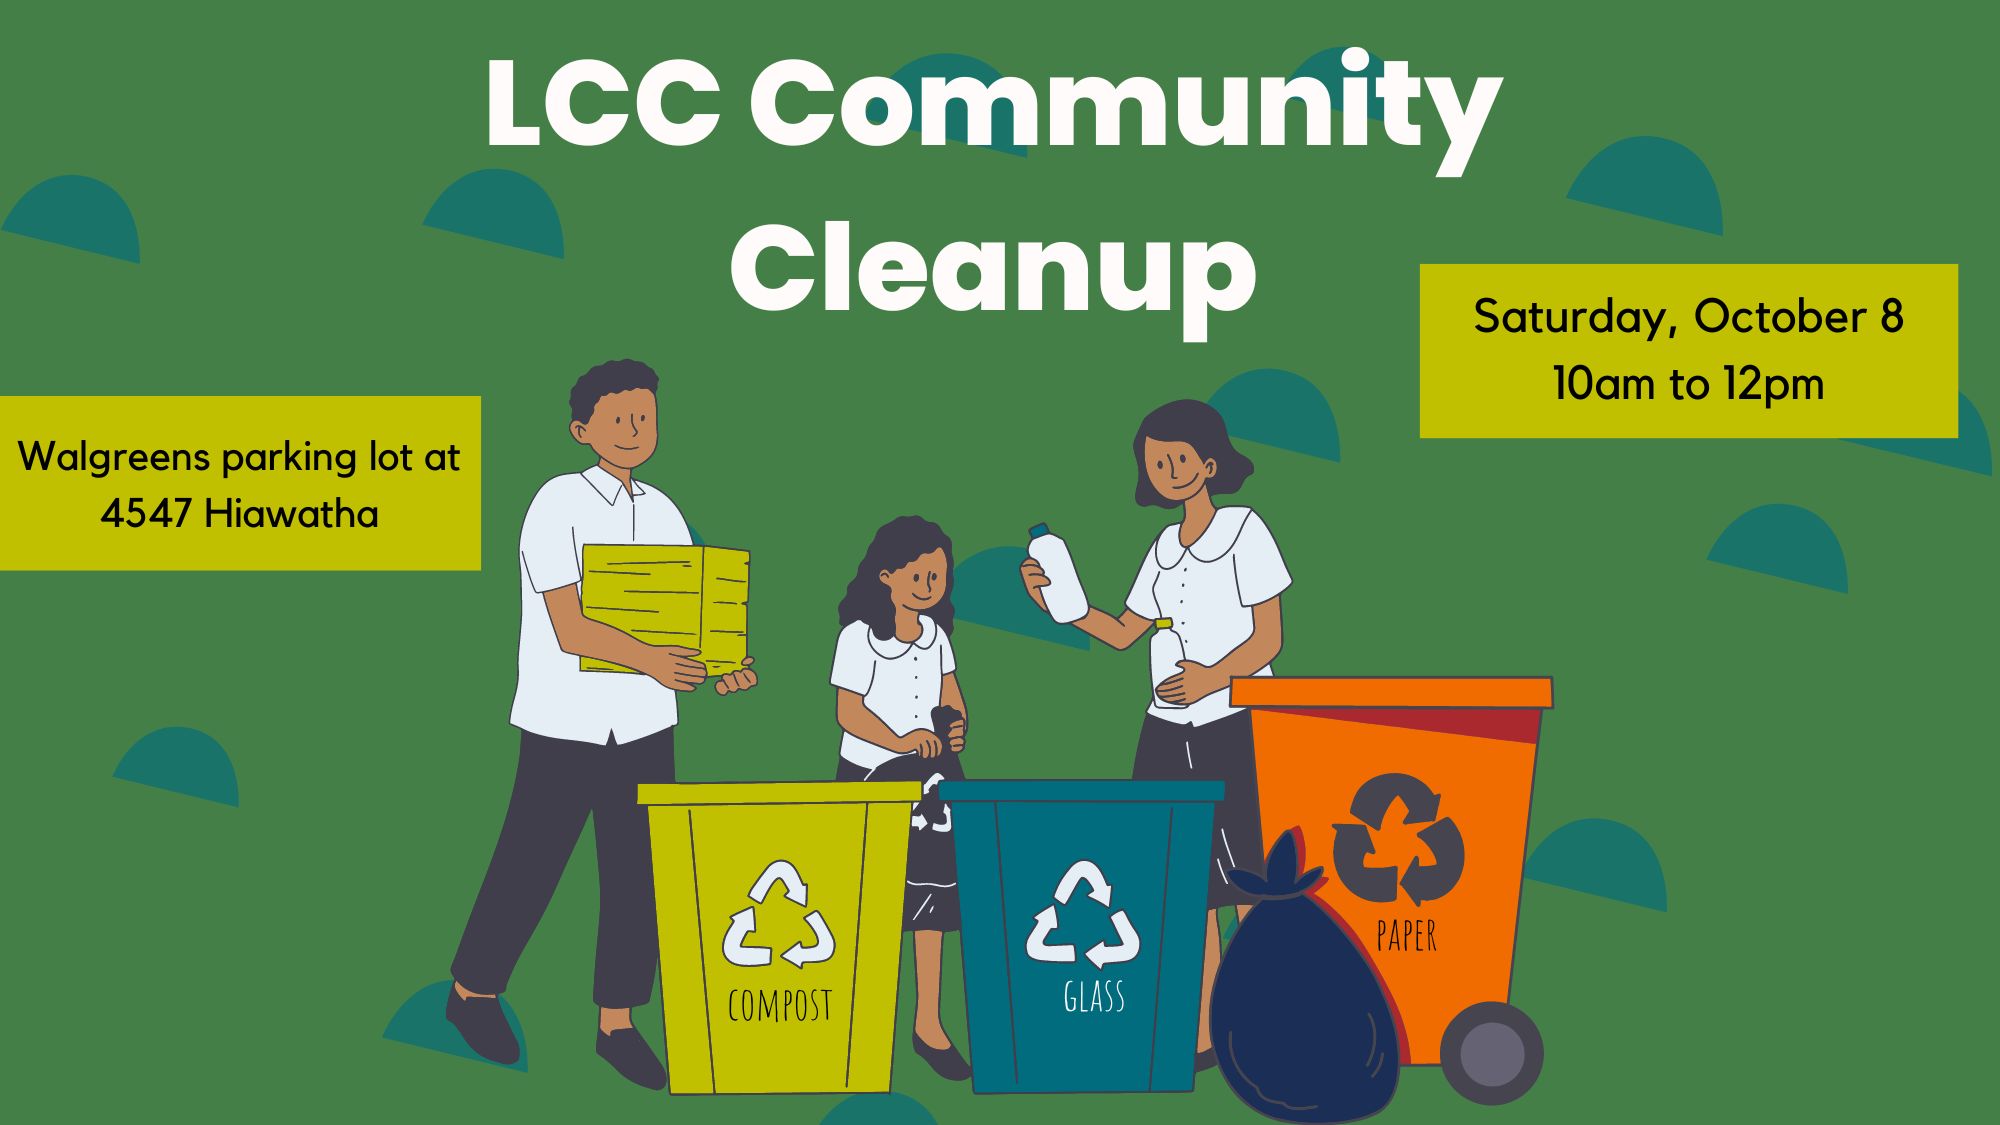 Lake Street Clean Up - Longfellow Community Council